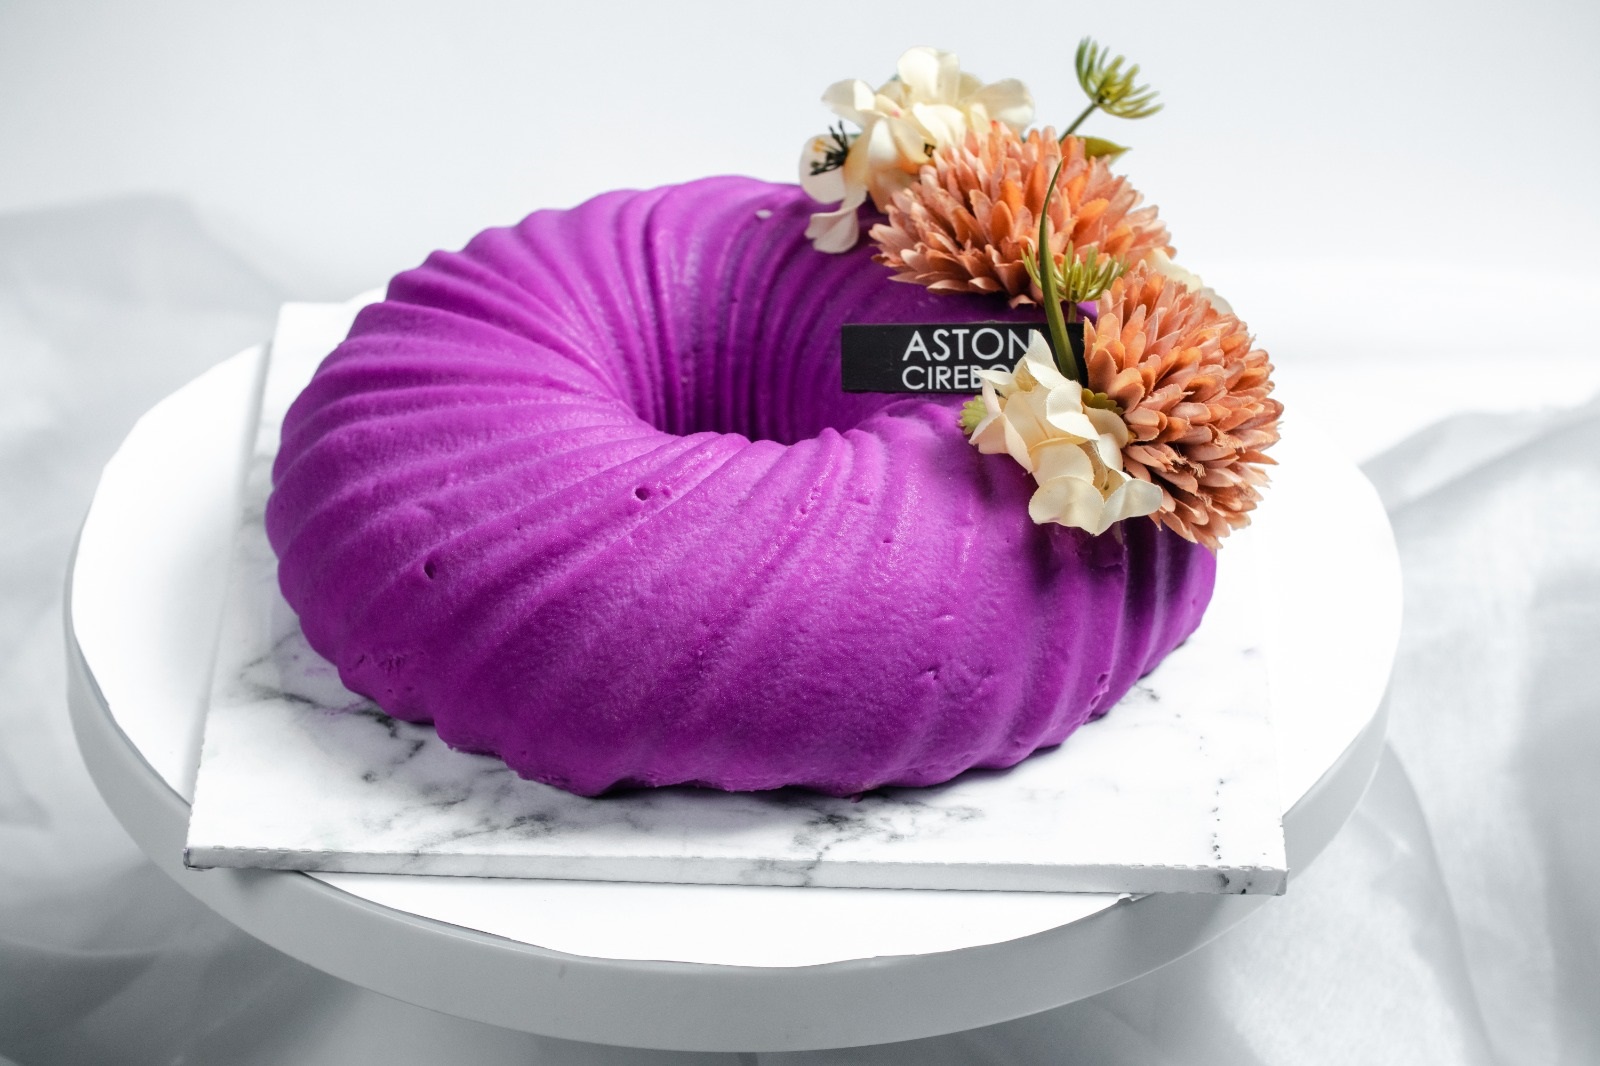 Kuliner di Cirebon, Aston Cirebon Sajikan Beragam Cake Cantik